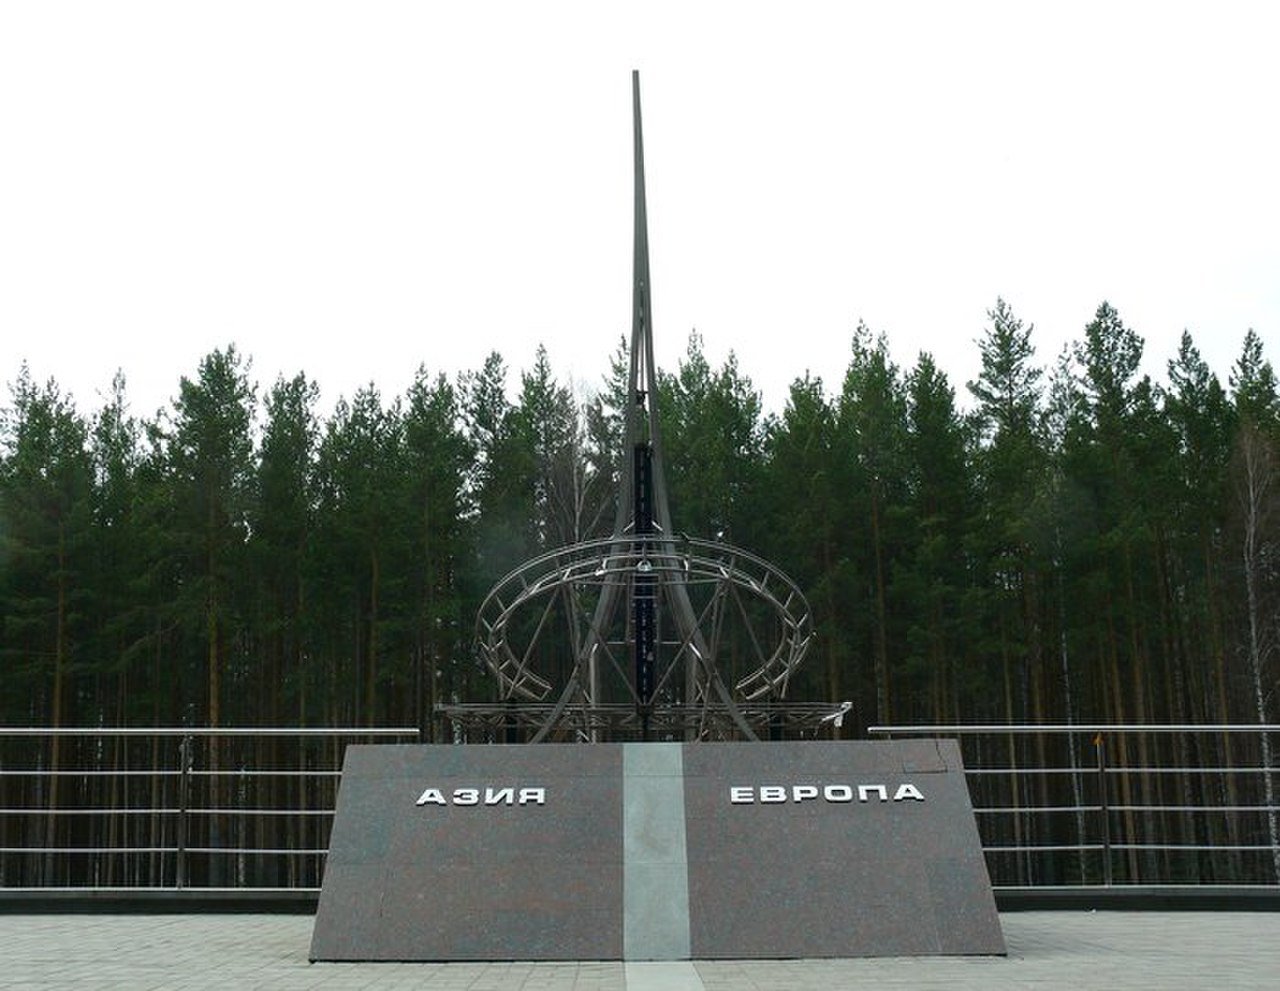 Border of europe and asia. Обелиск Европа-Азия Екатеринбург. Памятник Европа Азия Екатеринбург.